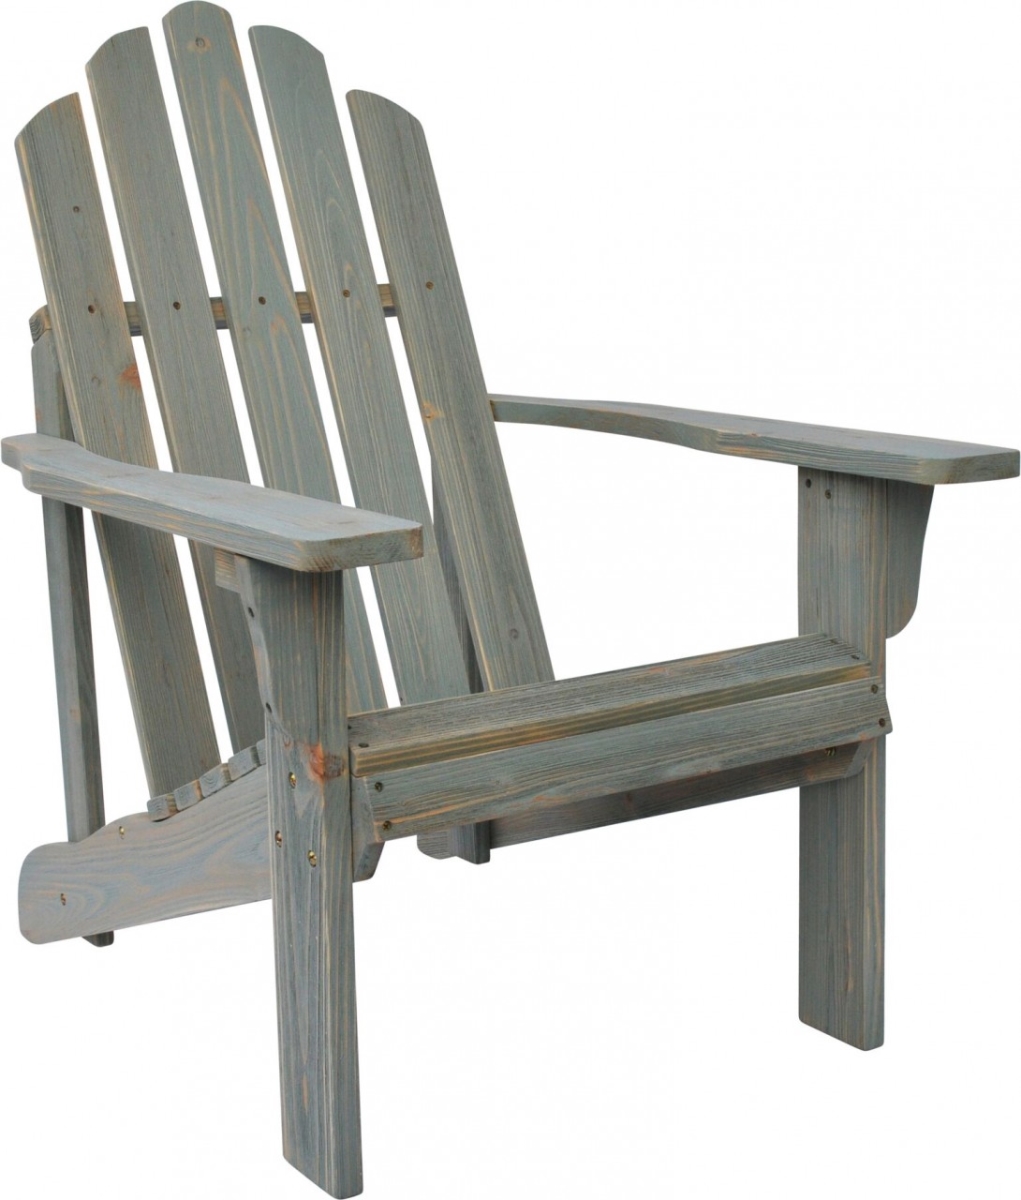 Shineco 5618db Rustic Adirondack Chair, Dutch Blue